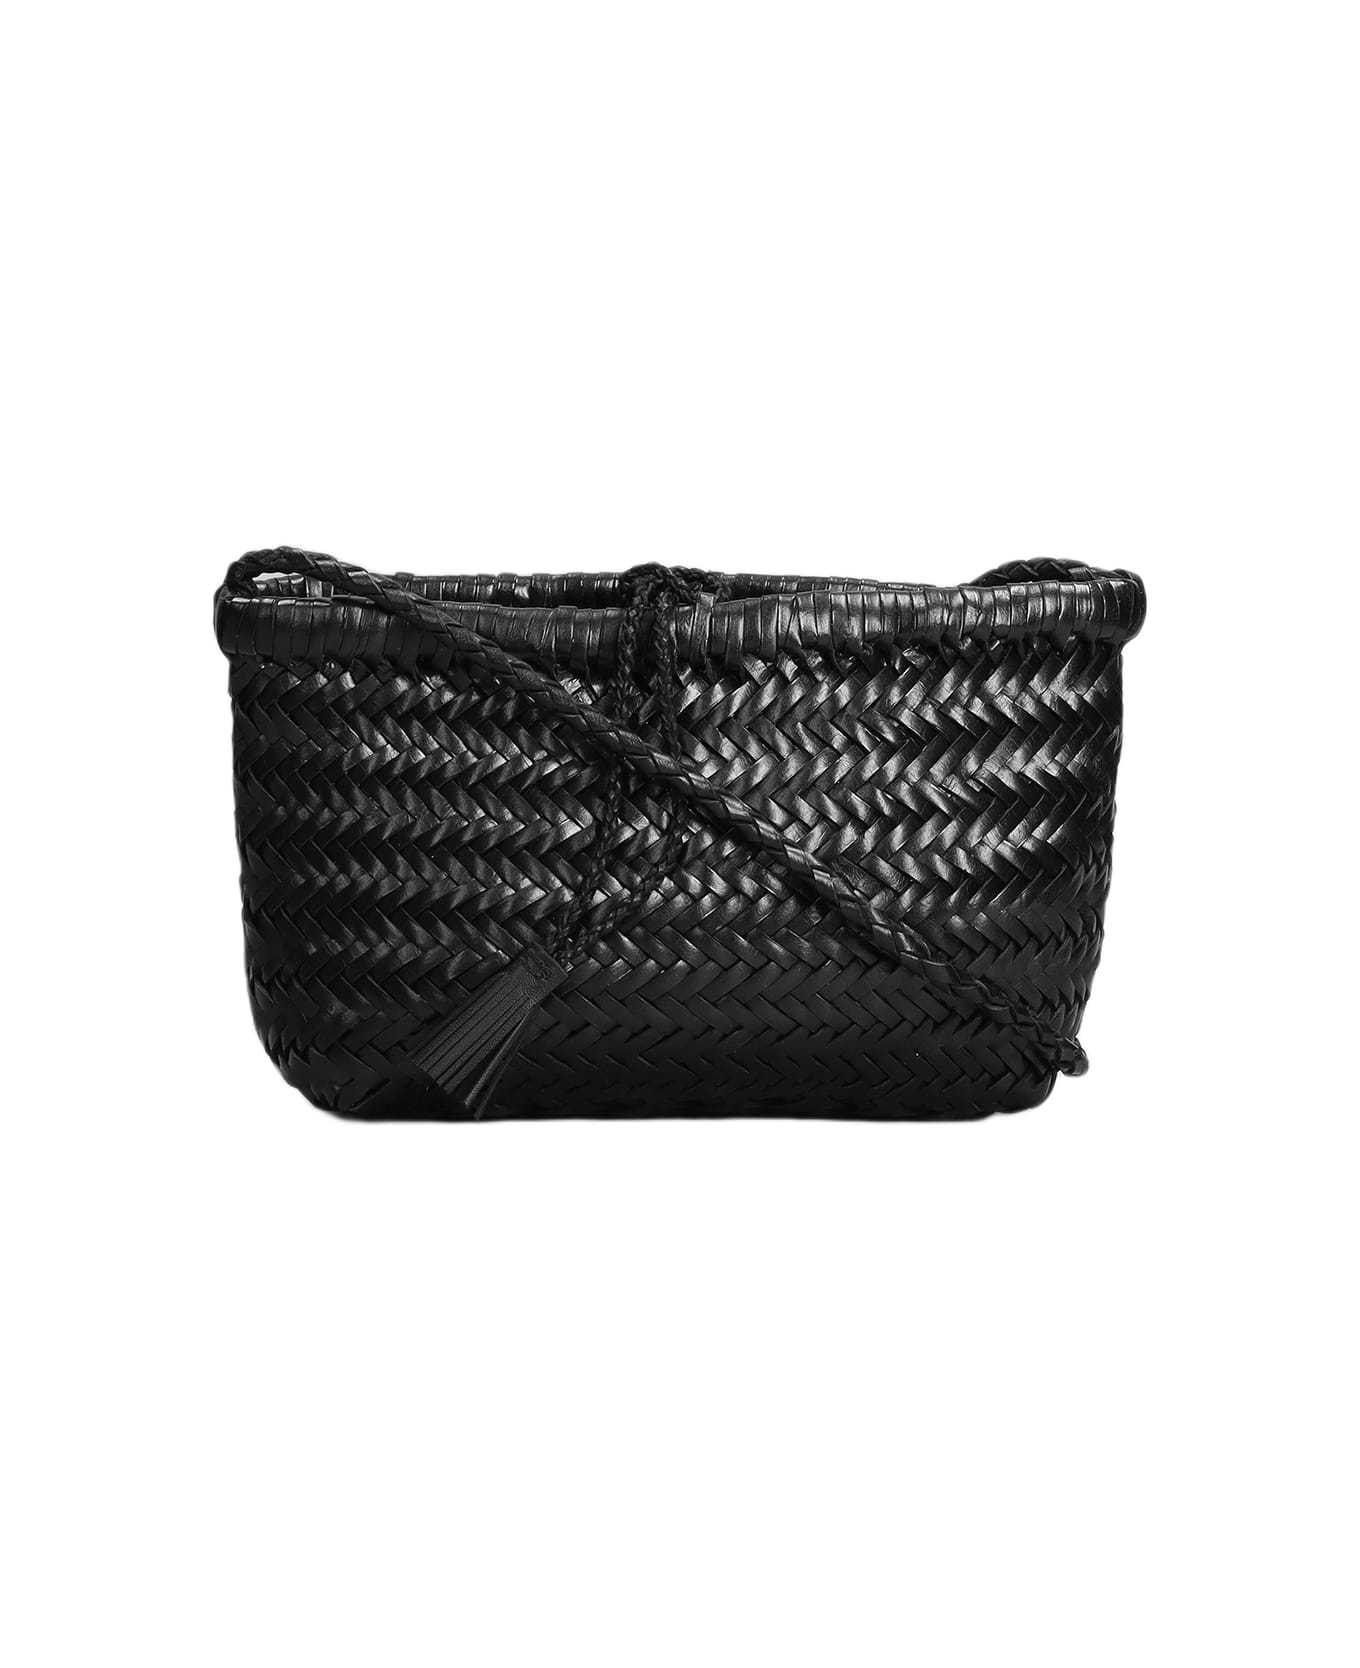 Dragon Diffusion Minsu Shoulder Bag In Black Leather - black